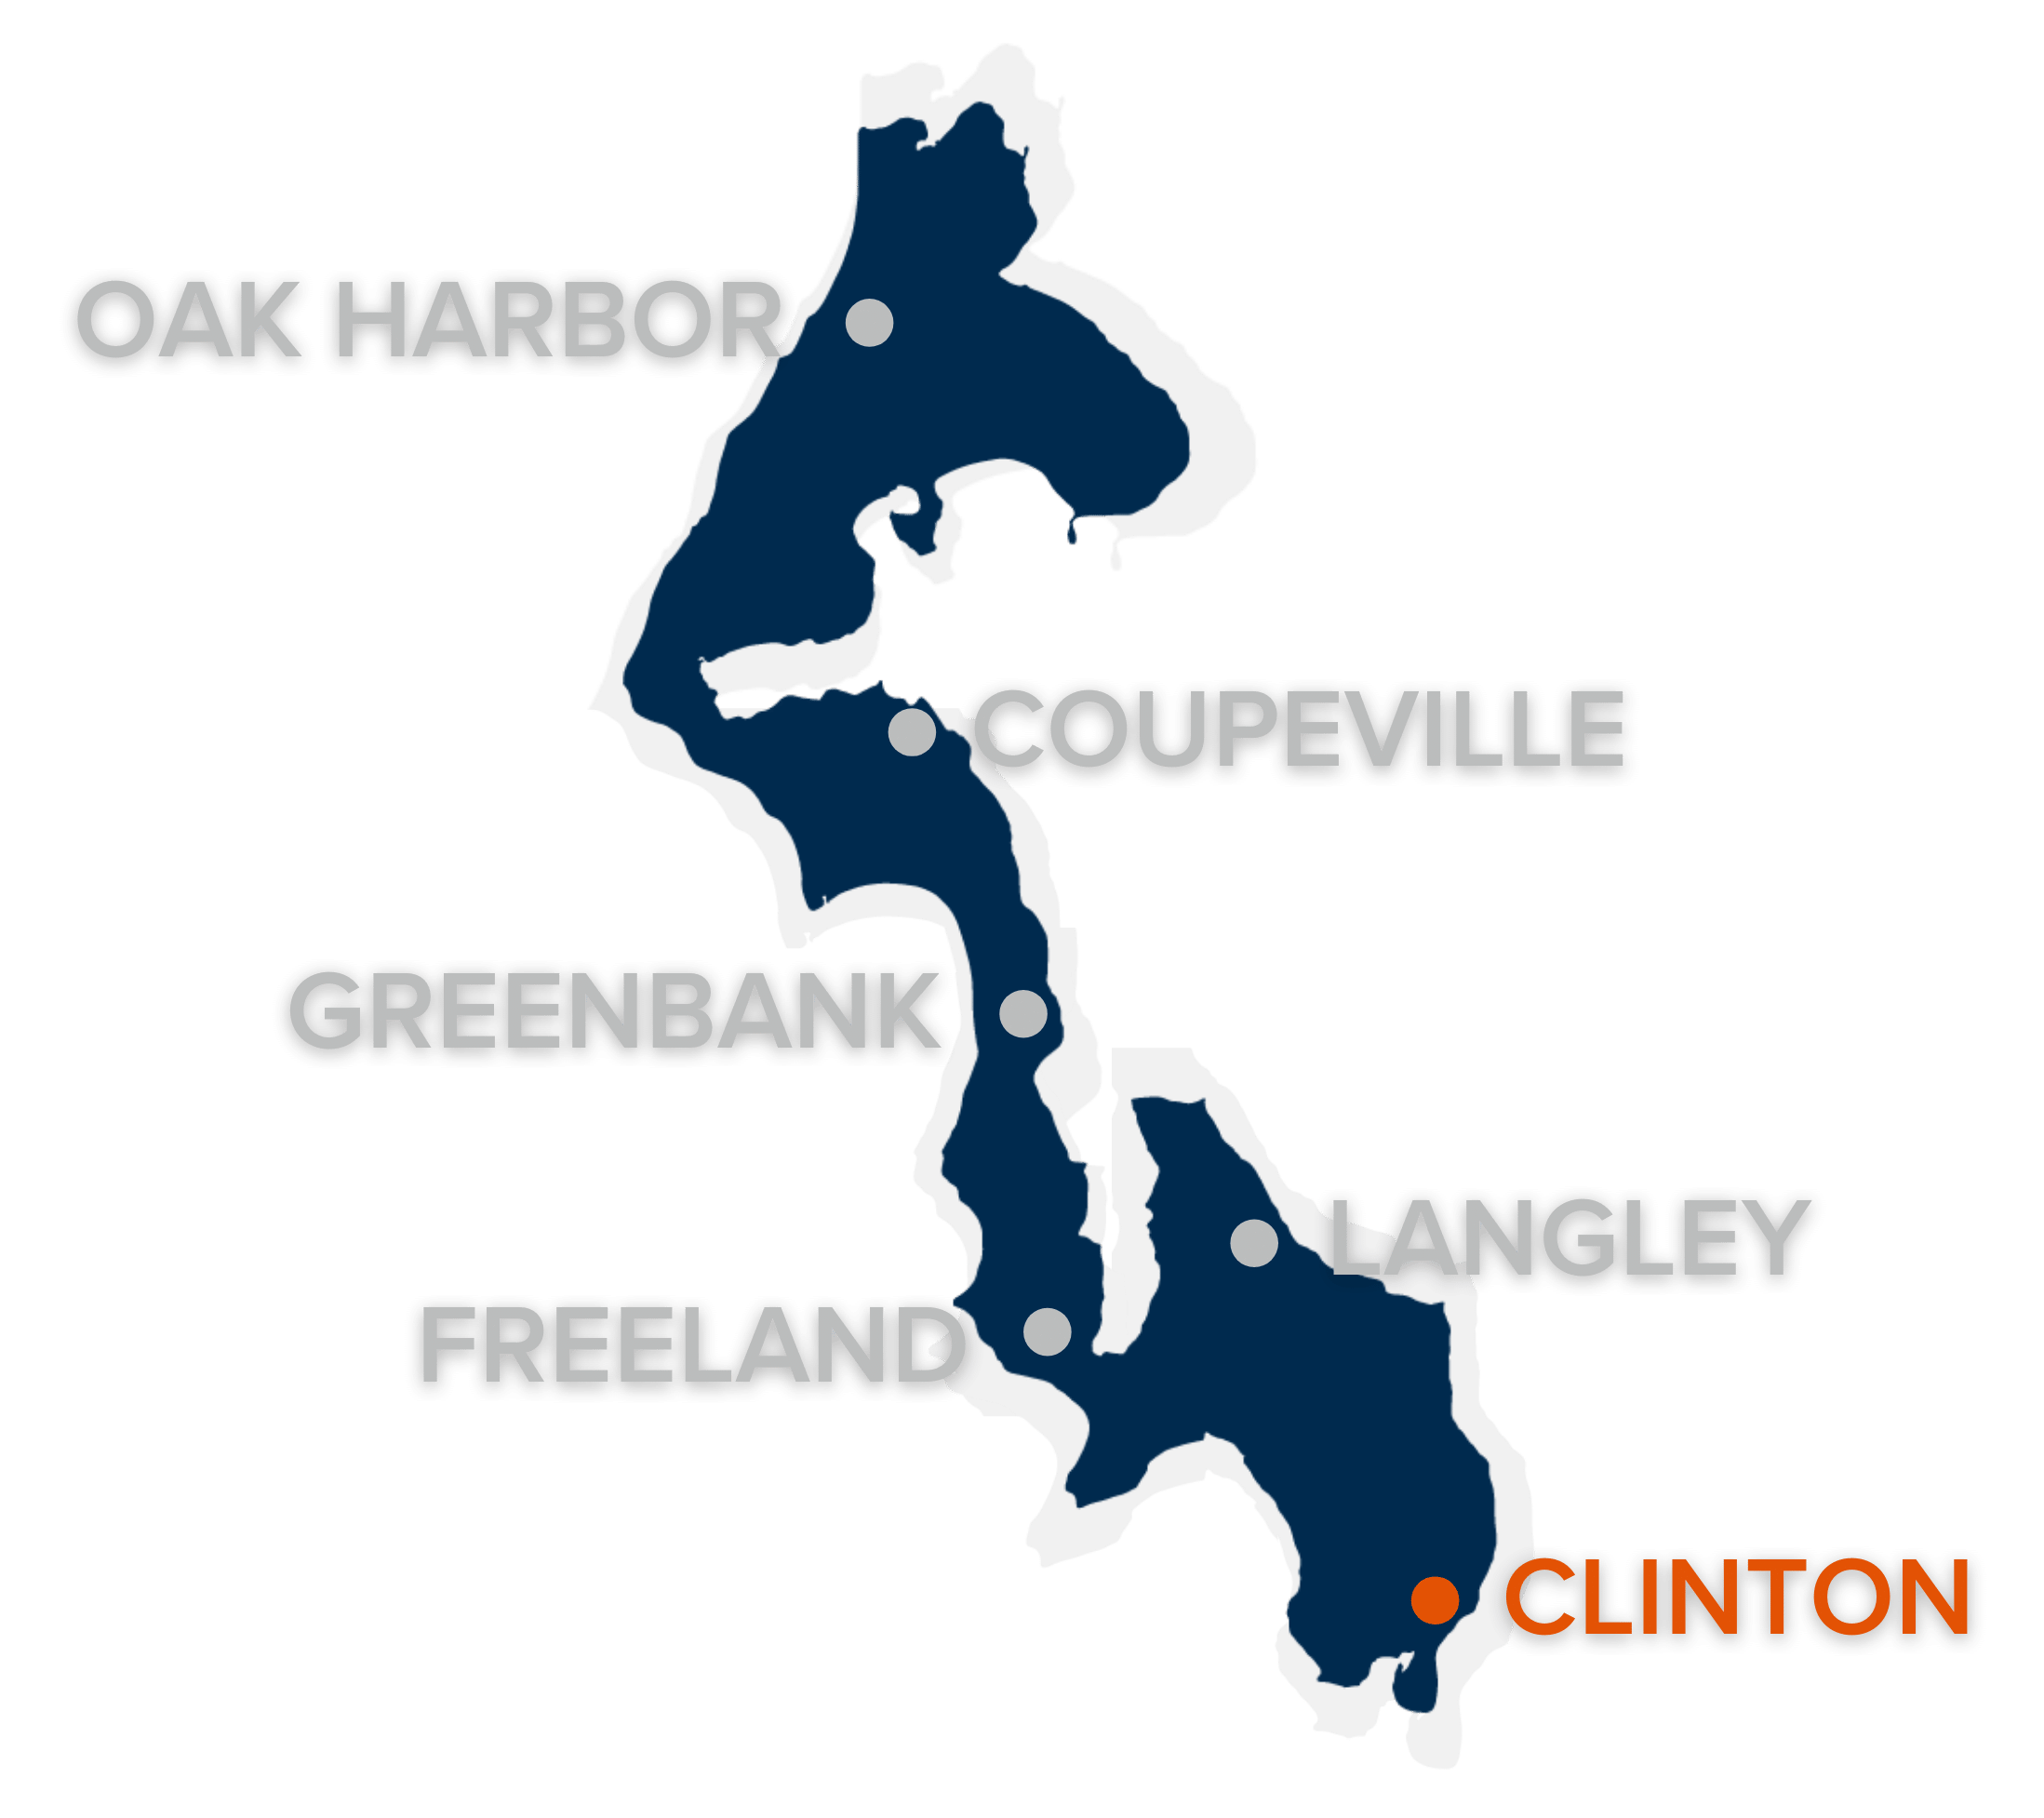 Clinton, Whidbey Island, Washington